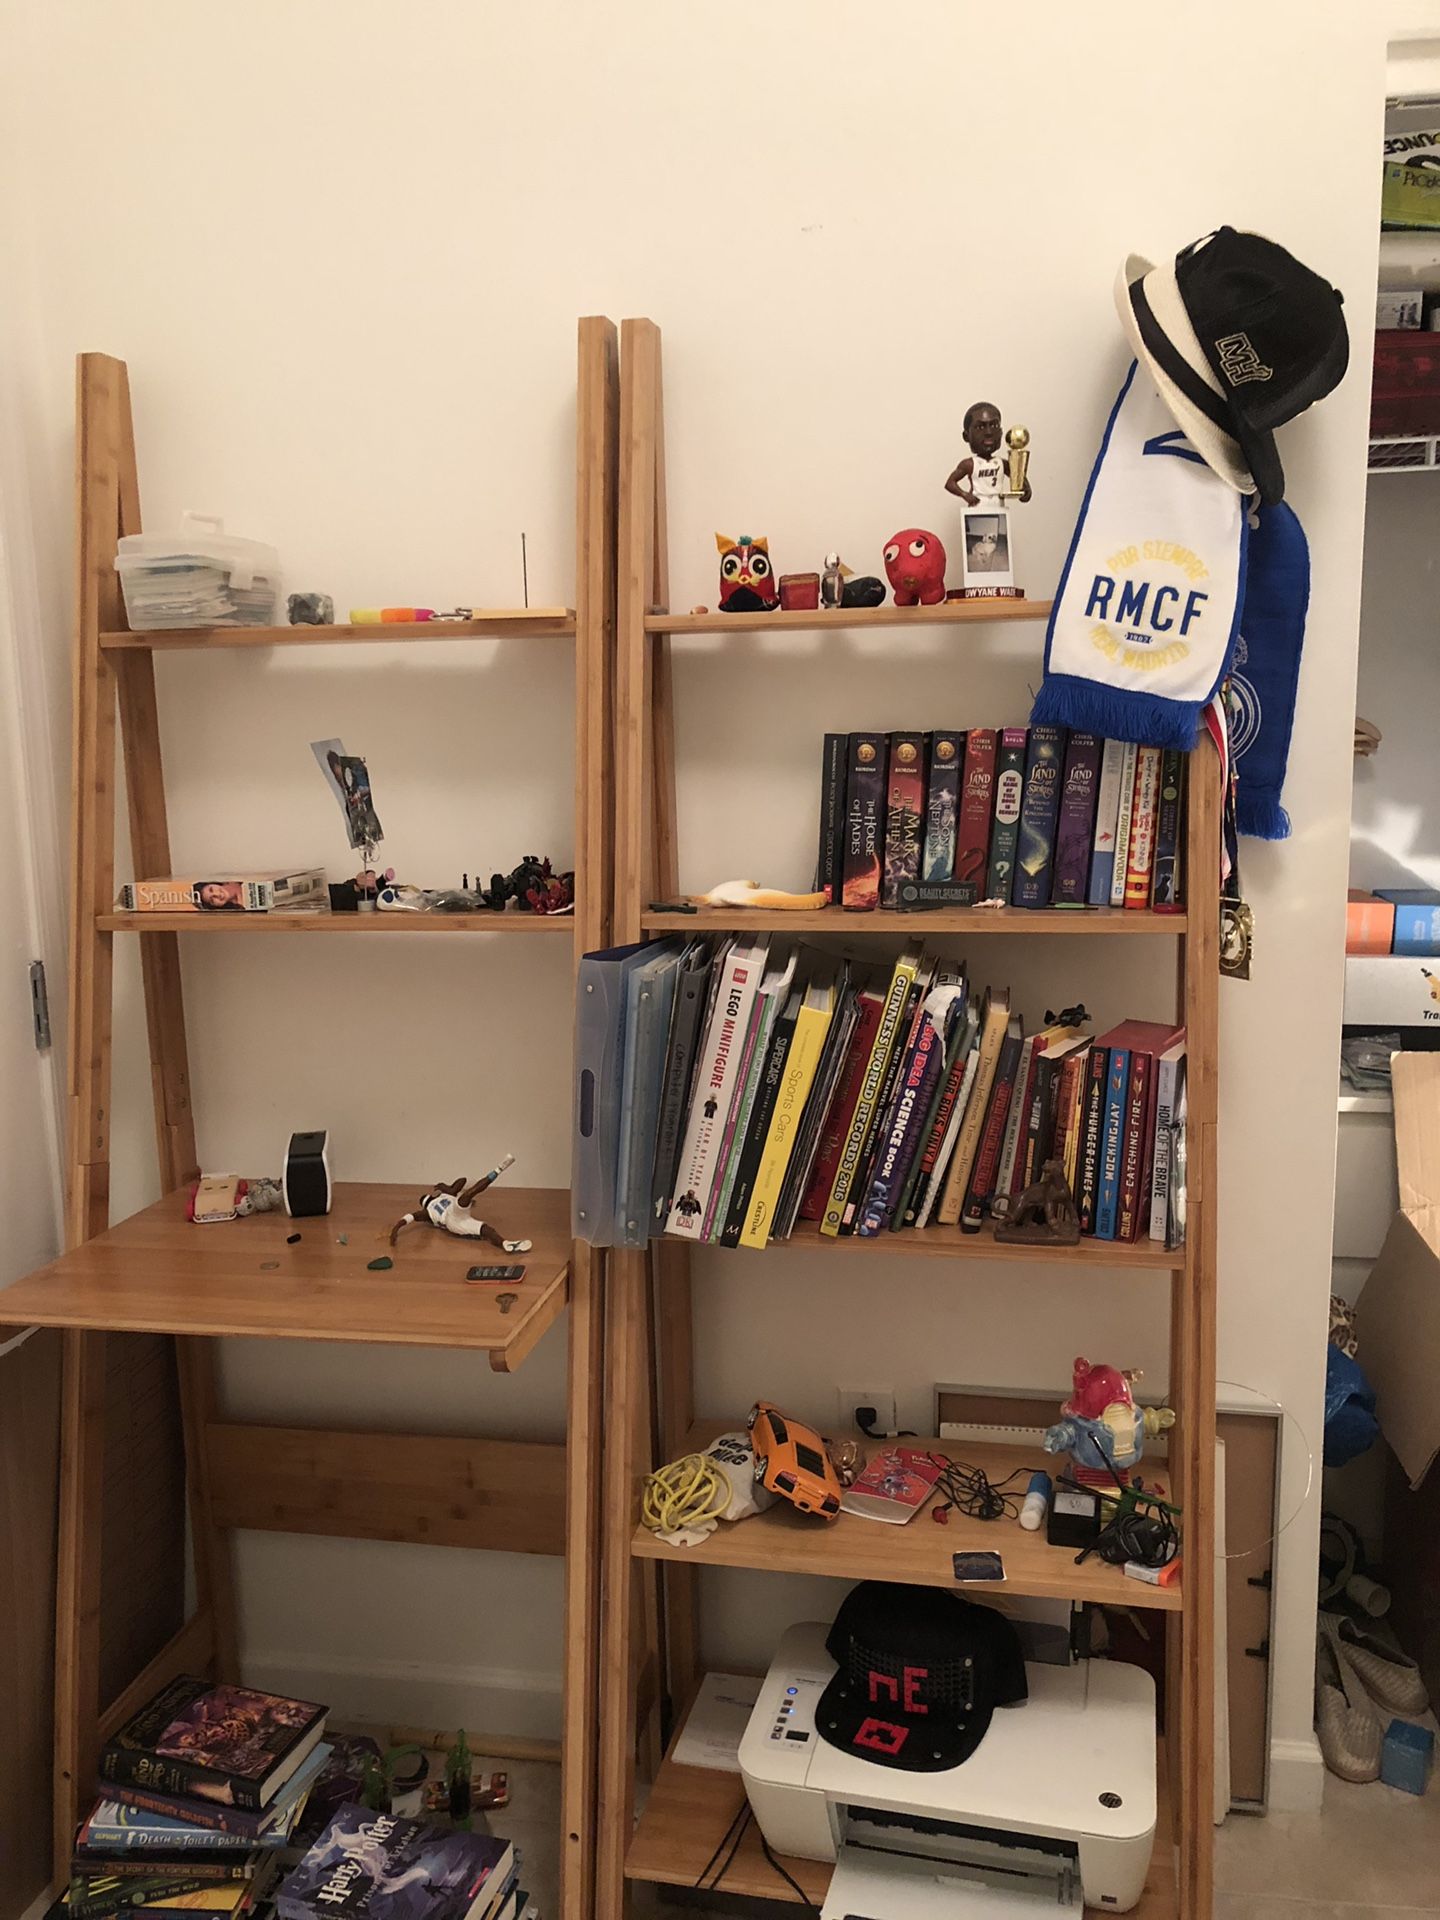 1 Bookshelf and 1 desk shelf assembled